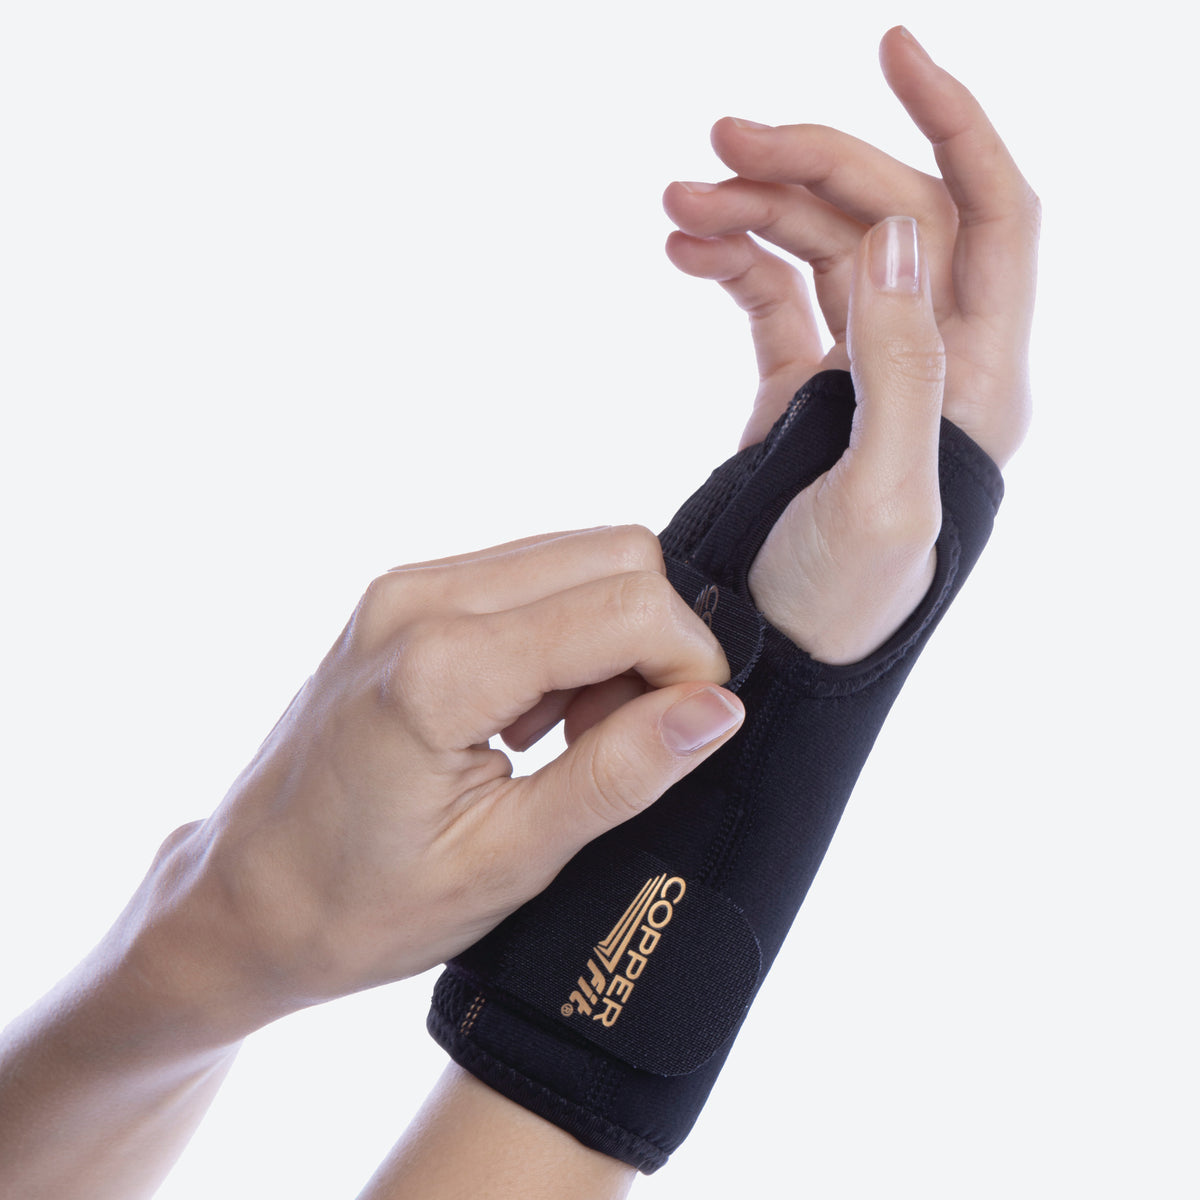  ACE Reversible Splint Wrist Brace, Provides moderate